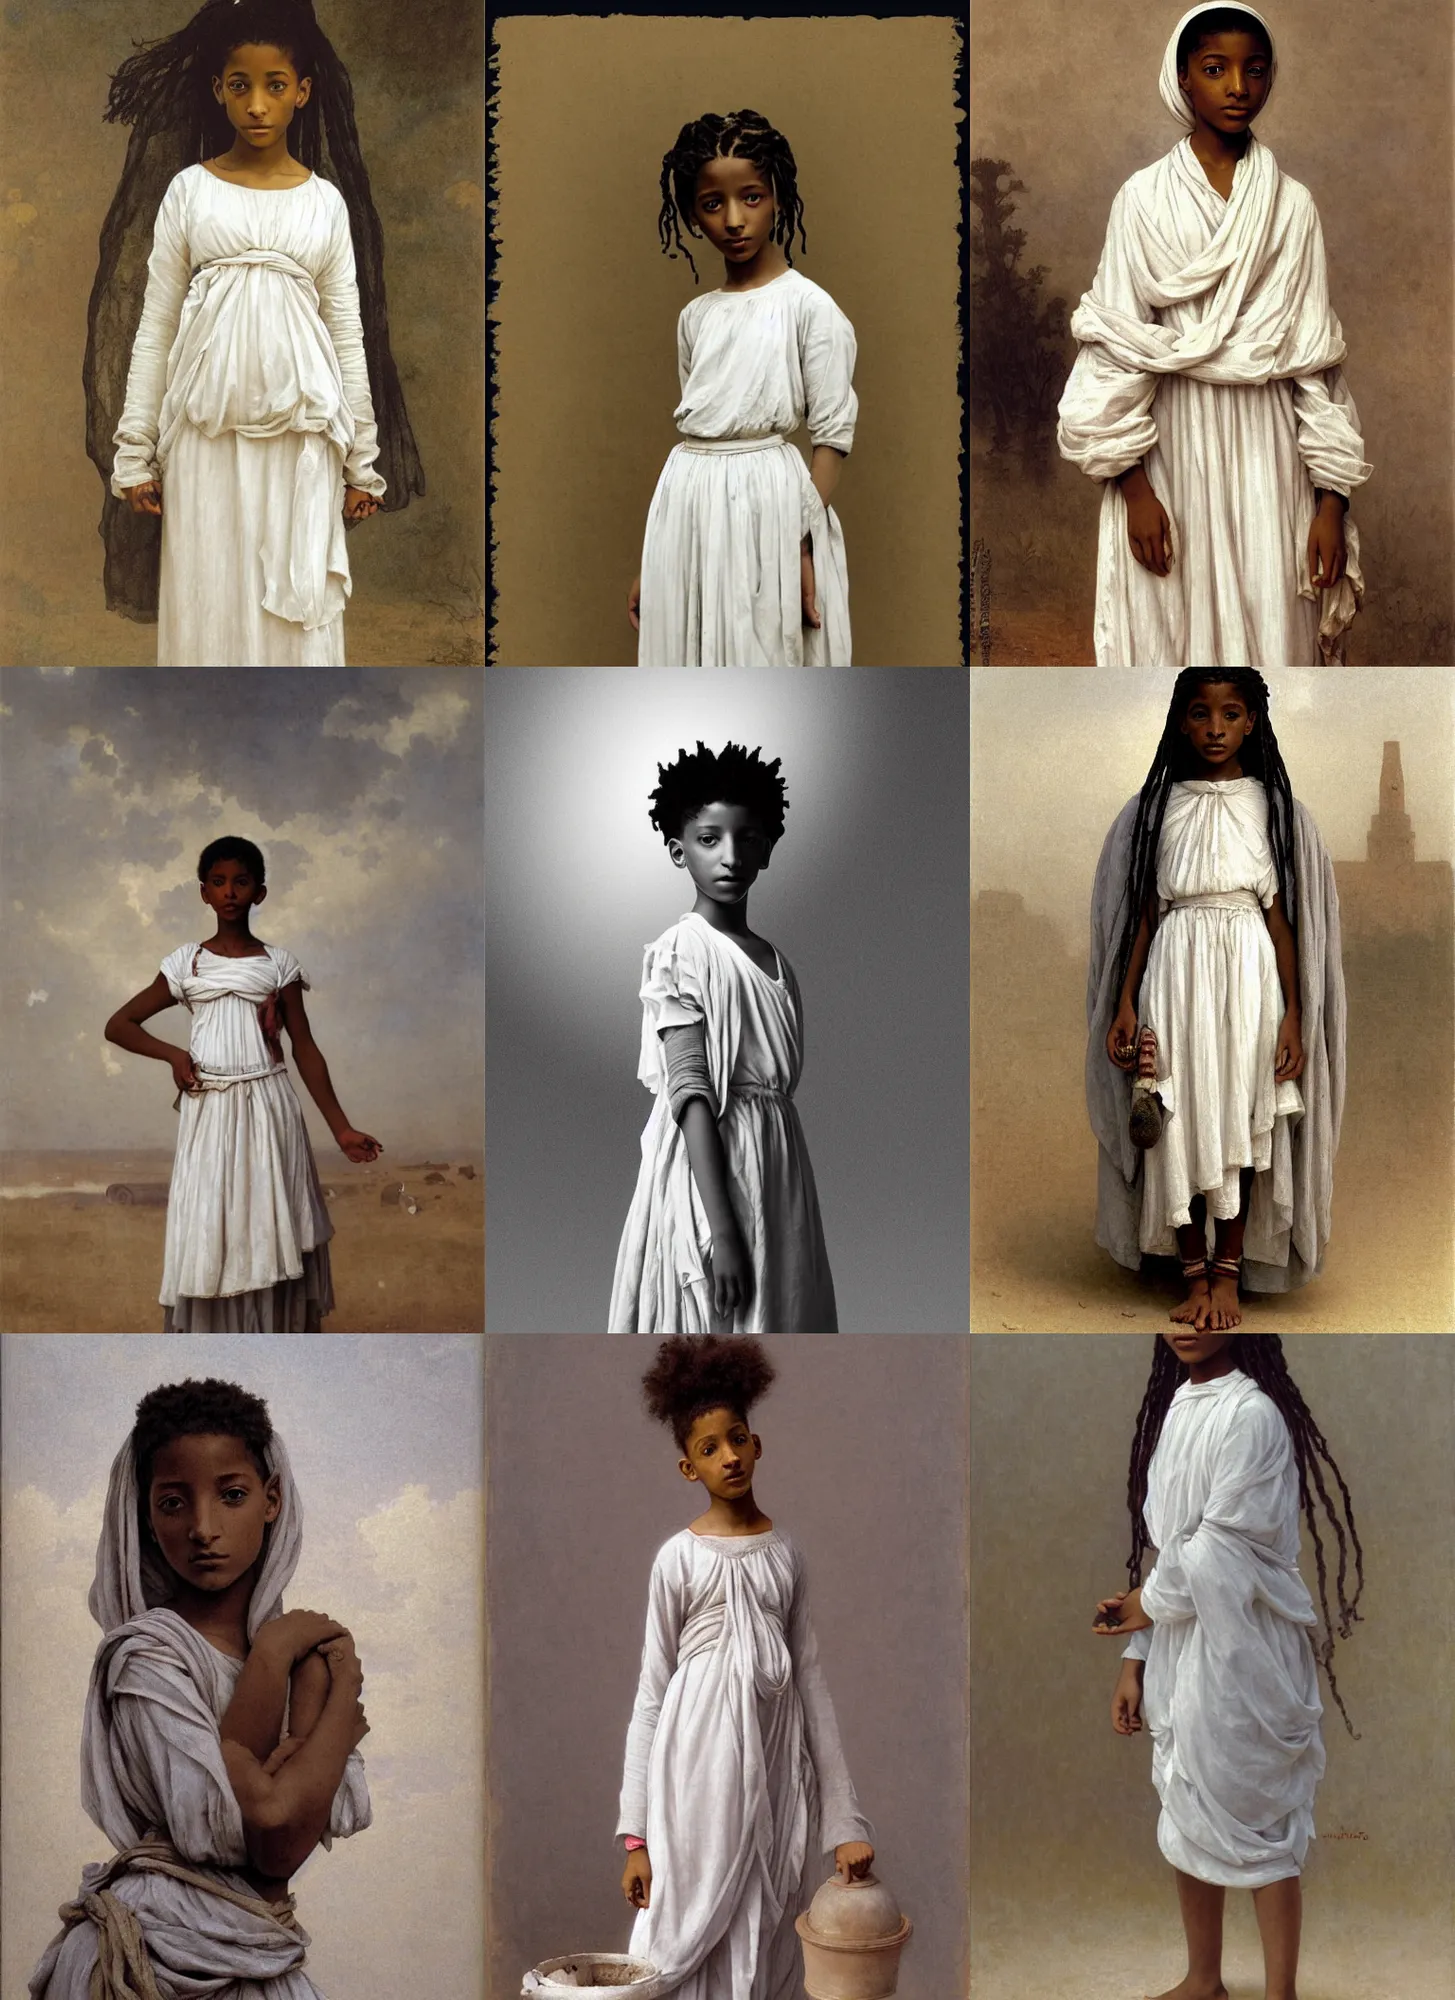 Prompt: willow smith as young libyan girl, white skirt, full body, symetrical, grey background, intricate, sharp focus, illustration, orientalism, bouguereau, rutkowski, jurgens